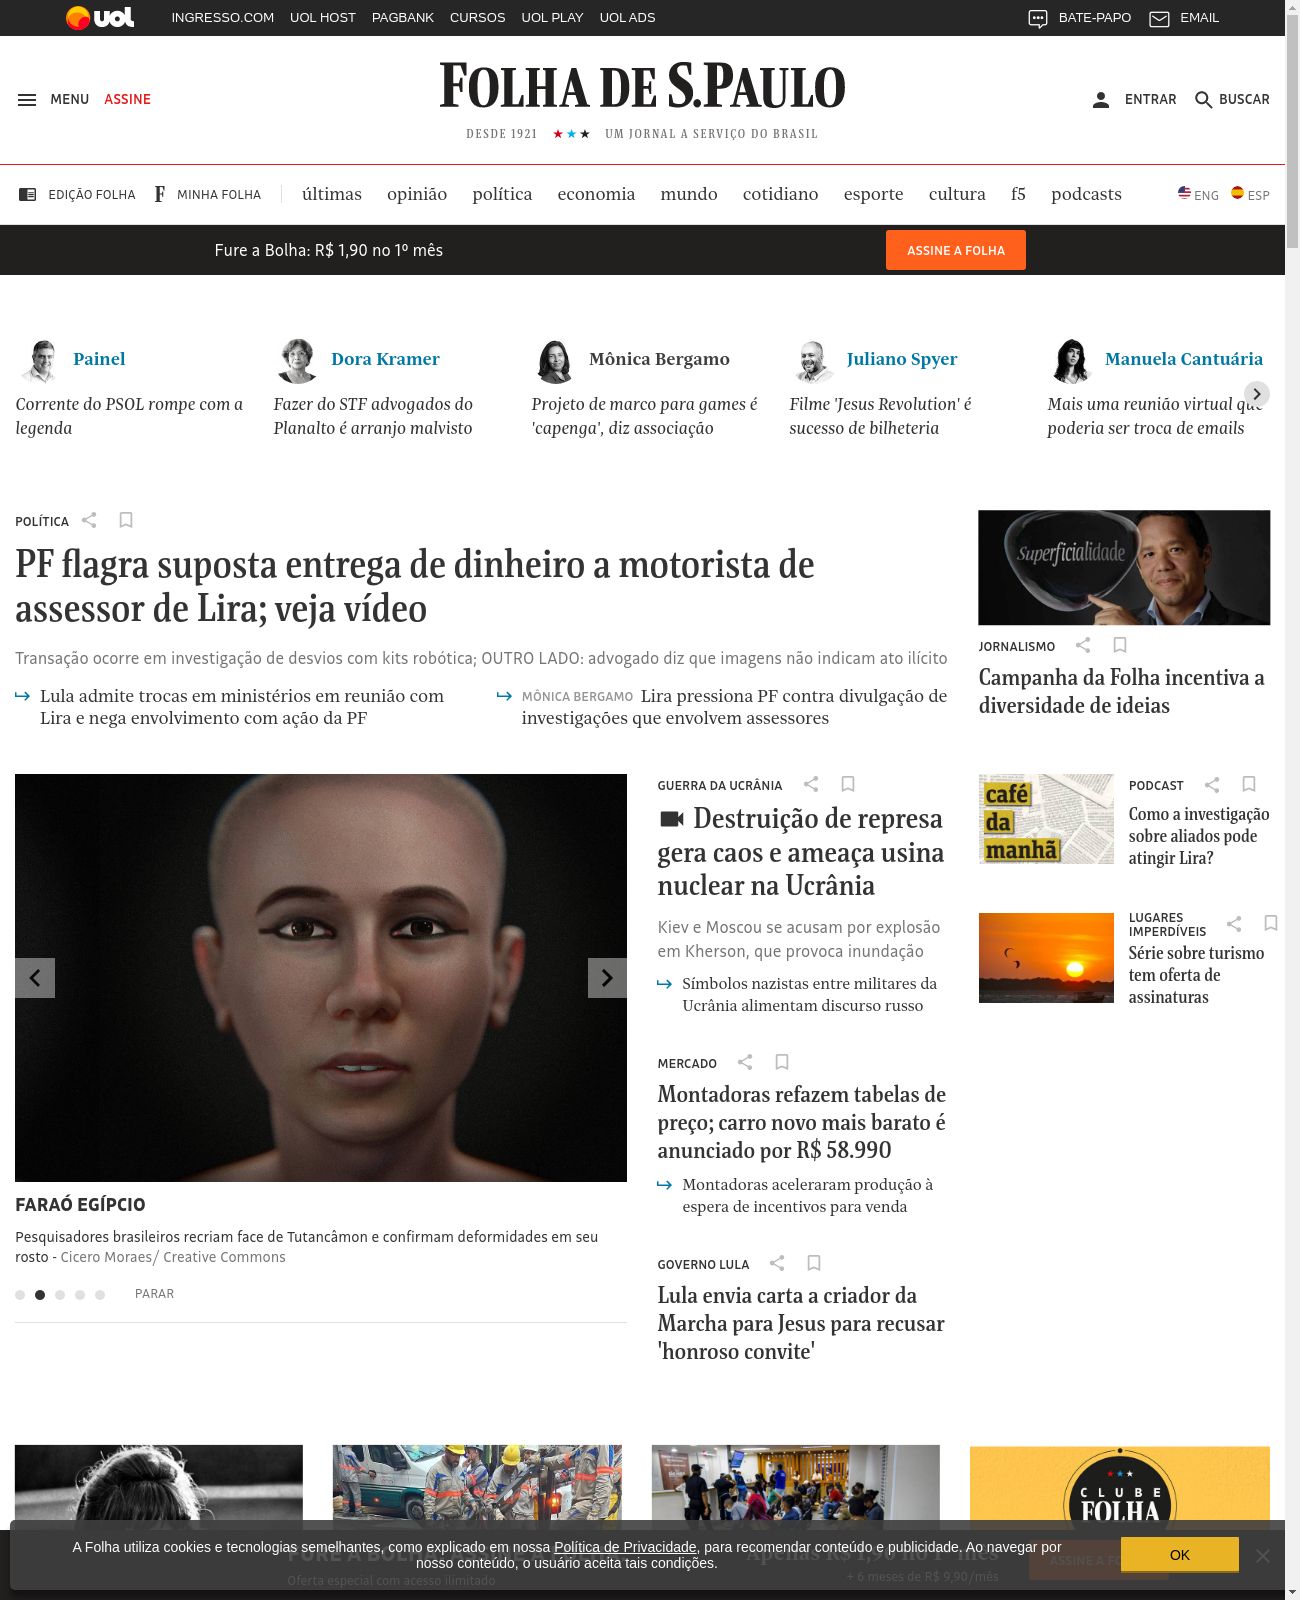 Folha de S.Paulo at 2023-06-06 10:32:58-03:00 local time